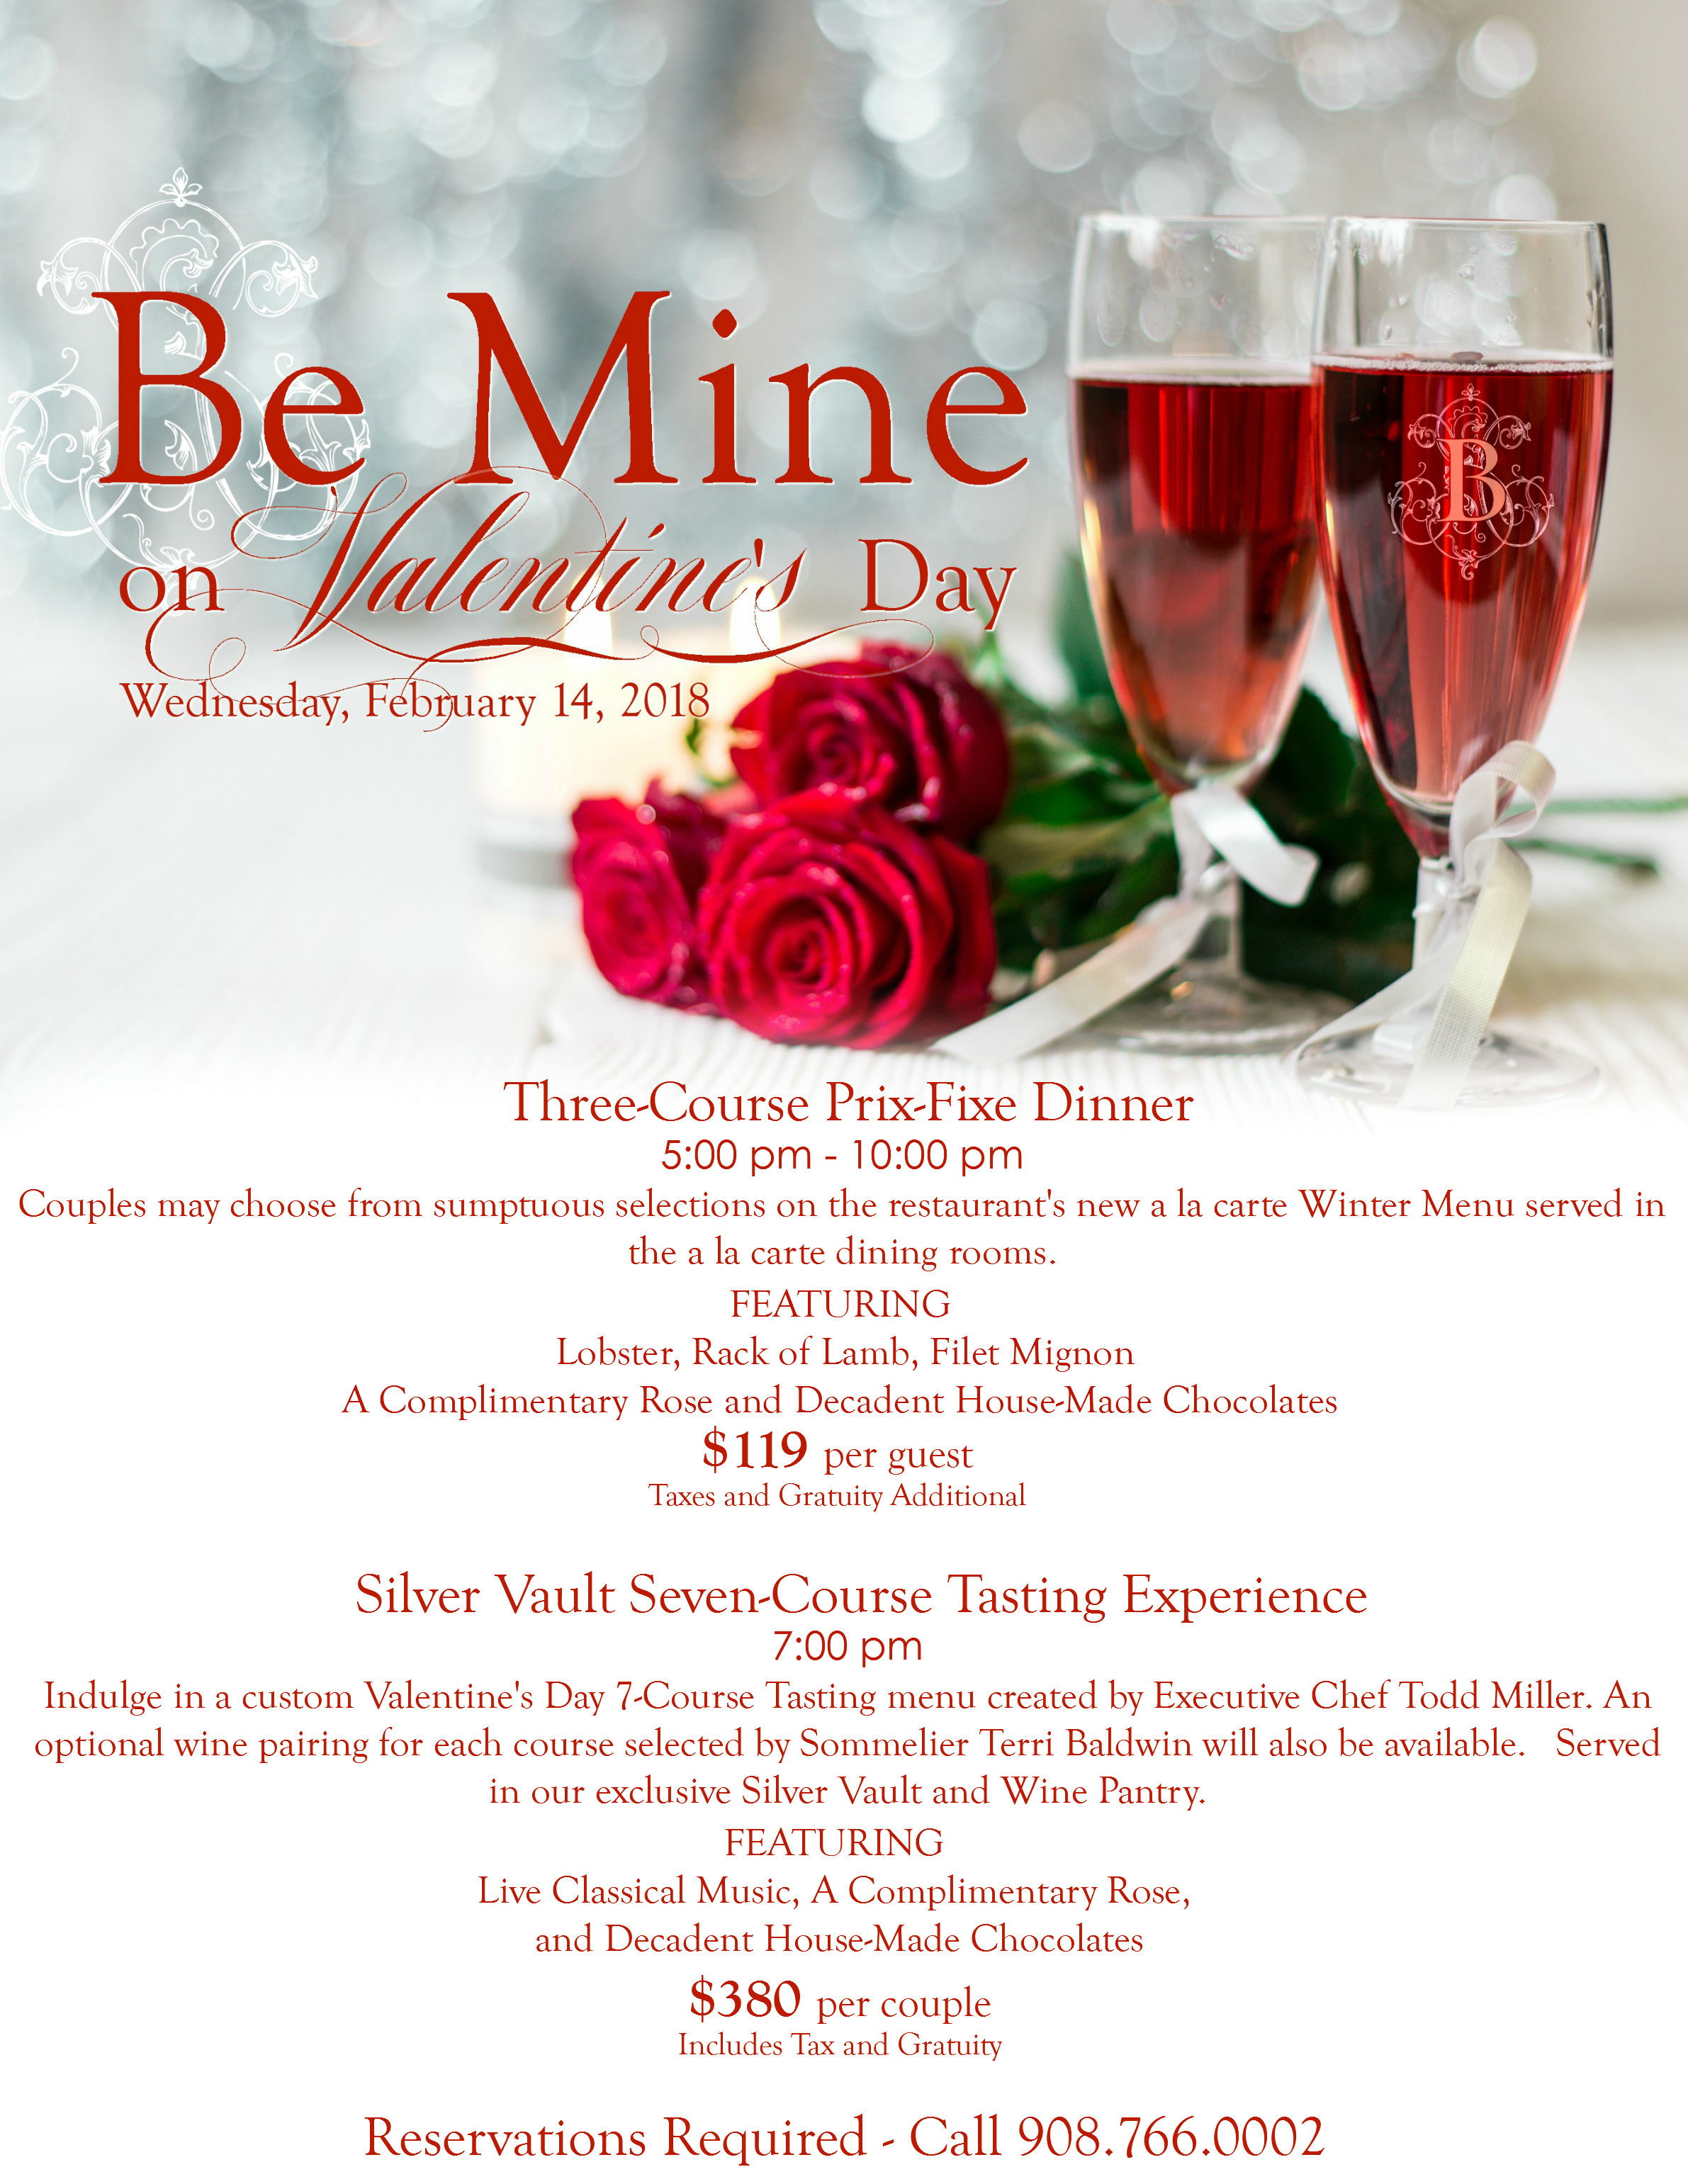 Valentine's Day Information at The Bernards Inn